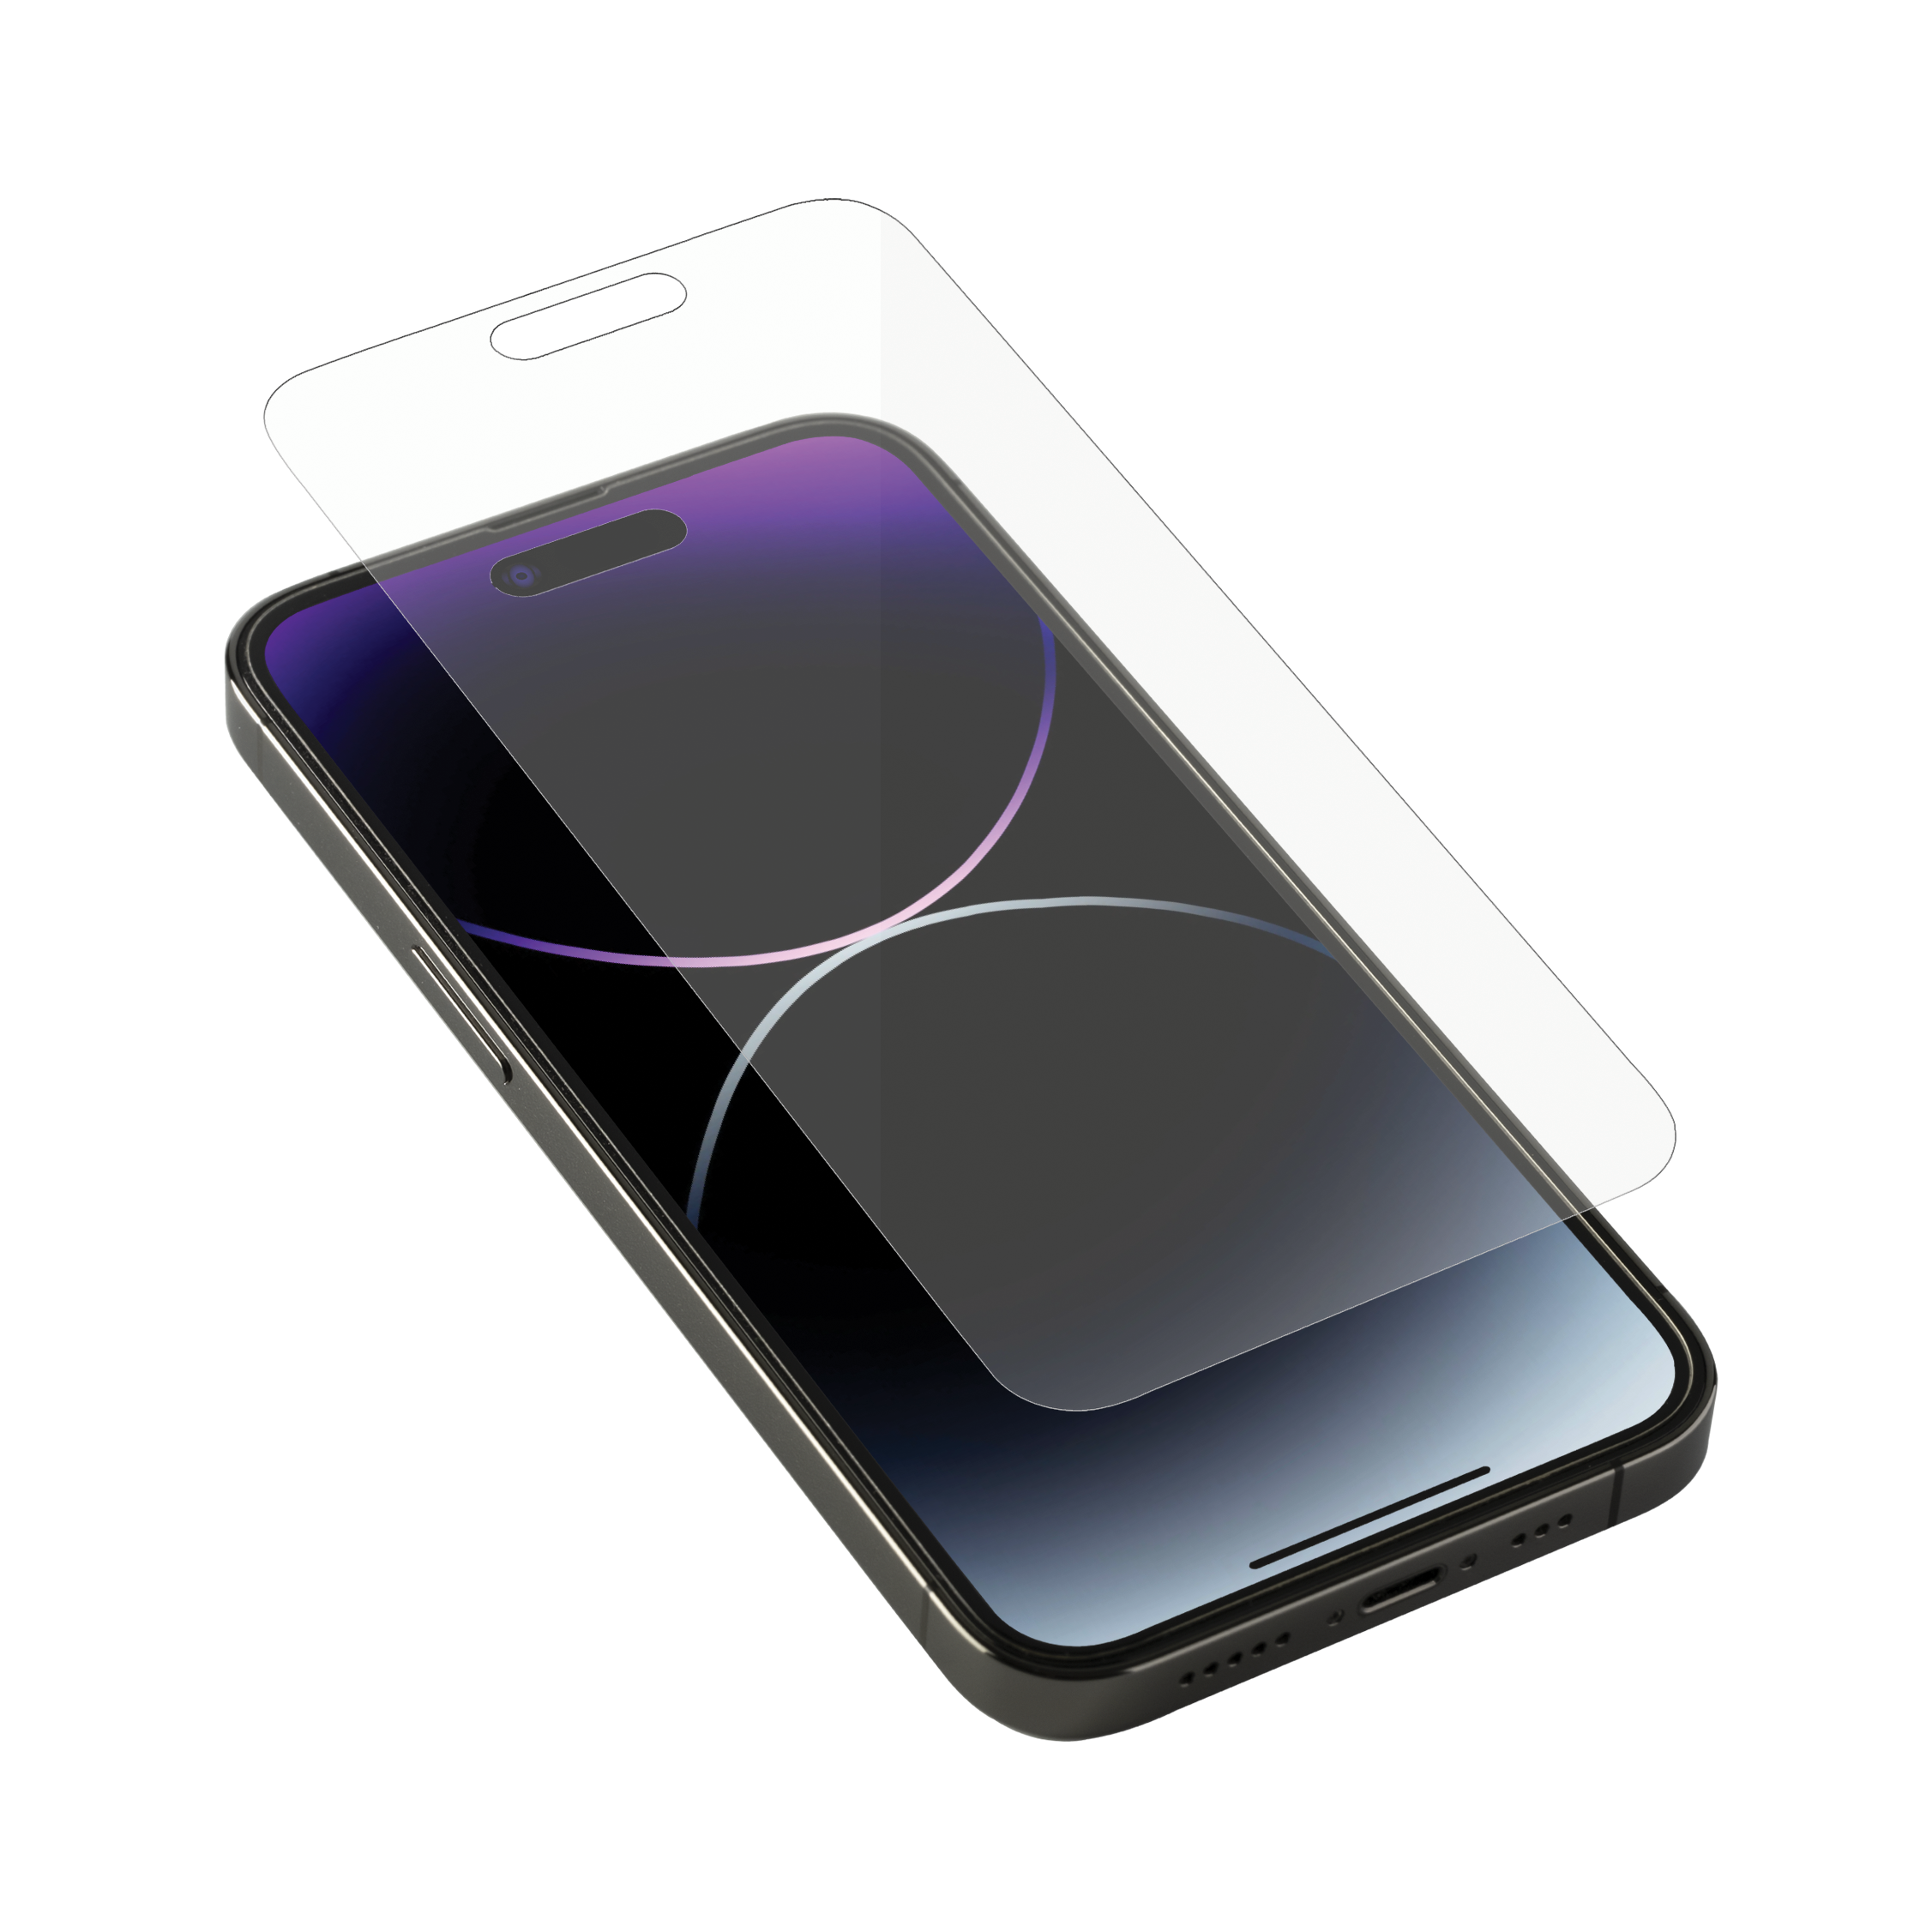 Protective Film For iPhone 14 Pro Max Glass iPhone14 Tempered Glass iPhone  14 Pro Screen Protector Apple I14 aifone 14Pro Clear Black Edge Glass i